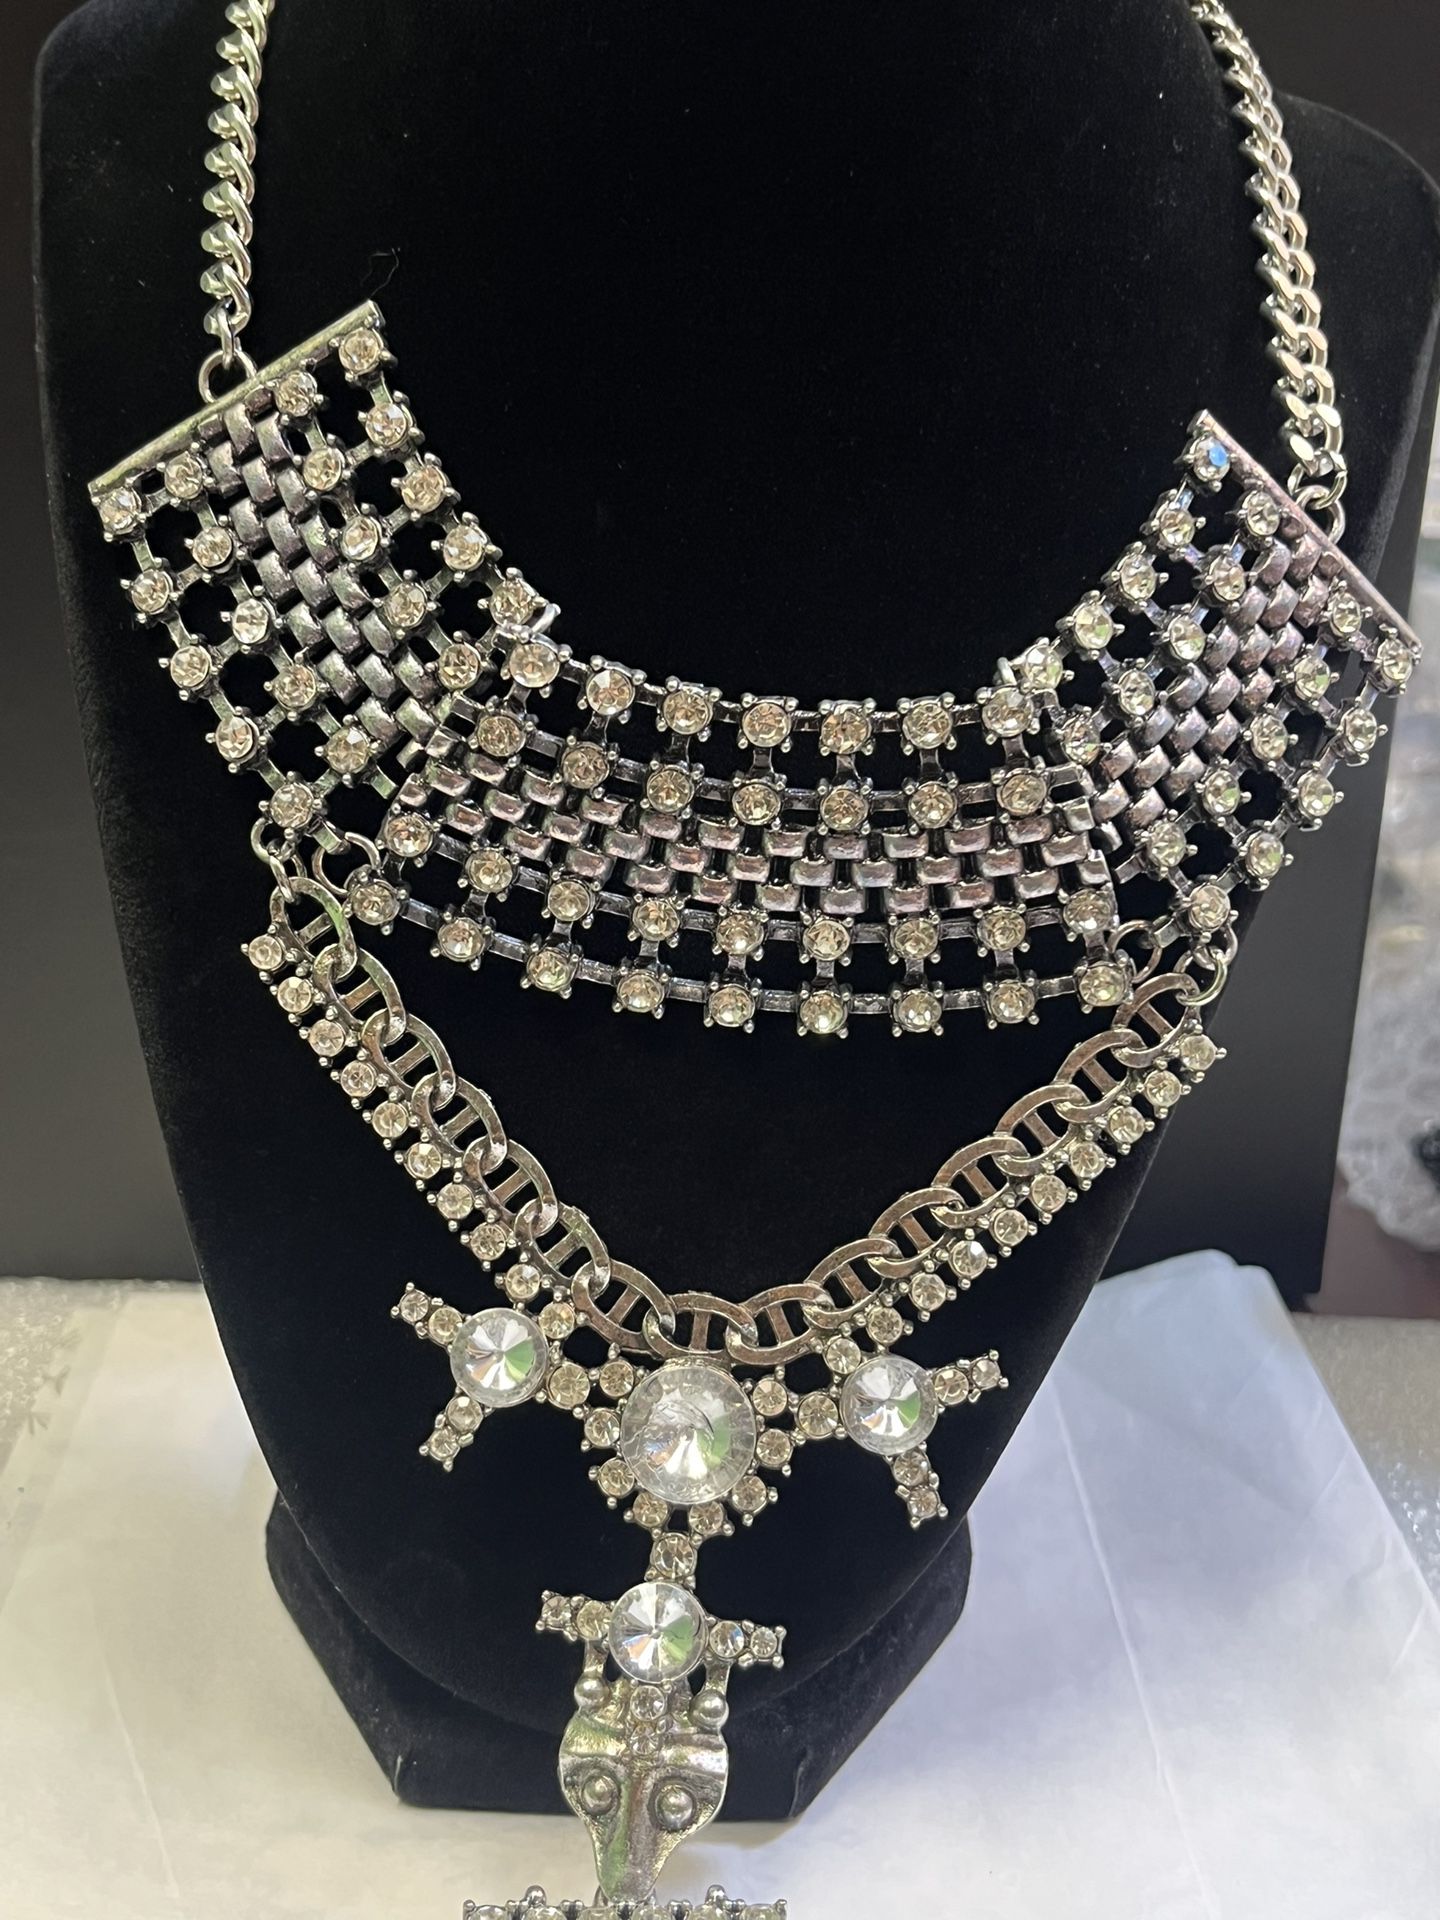 Fashion Design Bridal Jewelry Vintage Neck Bib Collar Chokers Statement Necklaces